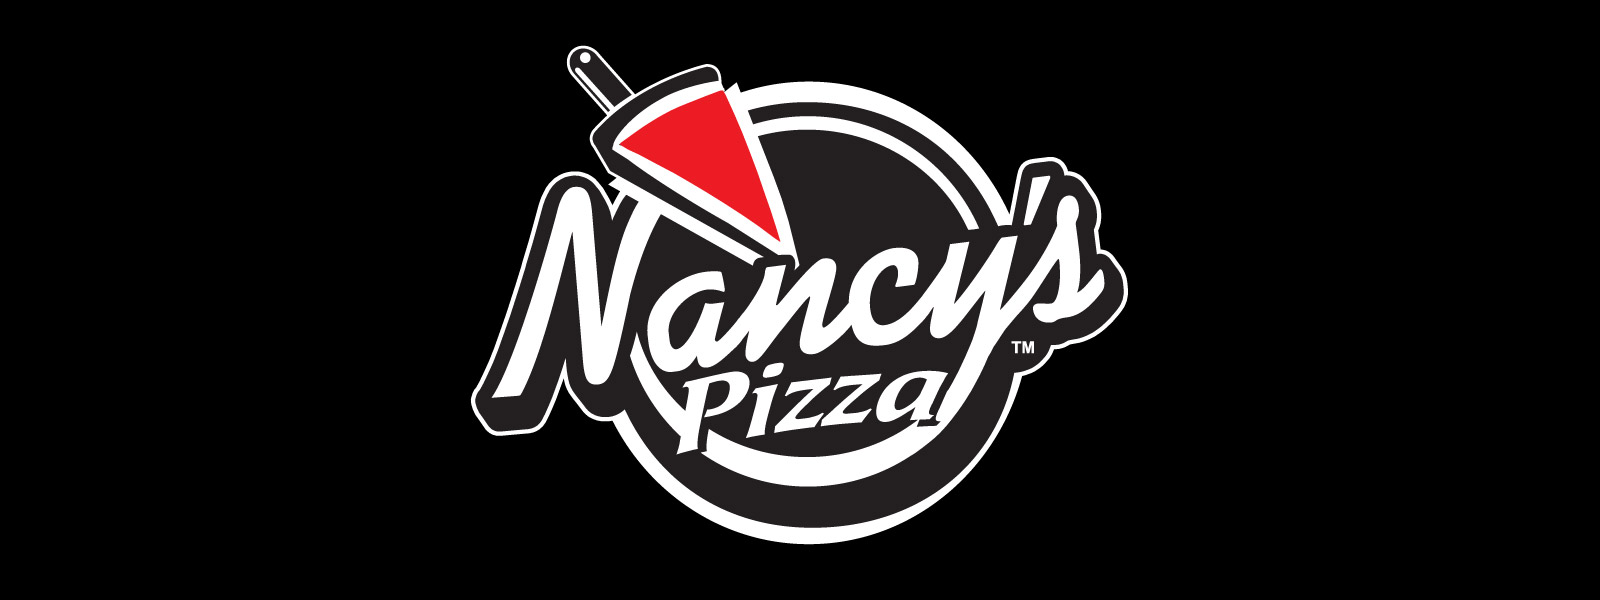 nancys-Pizza-header